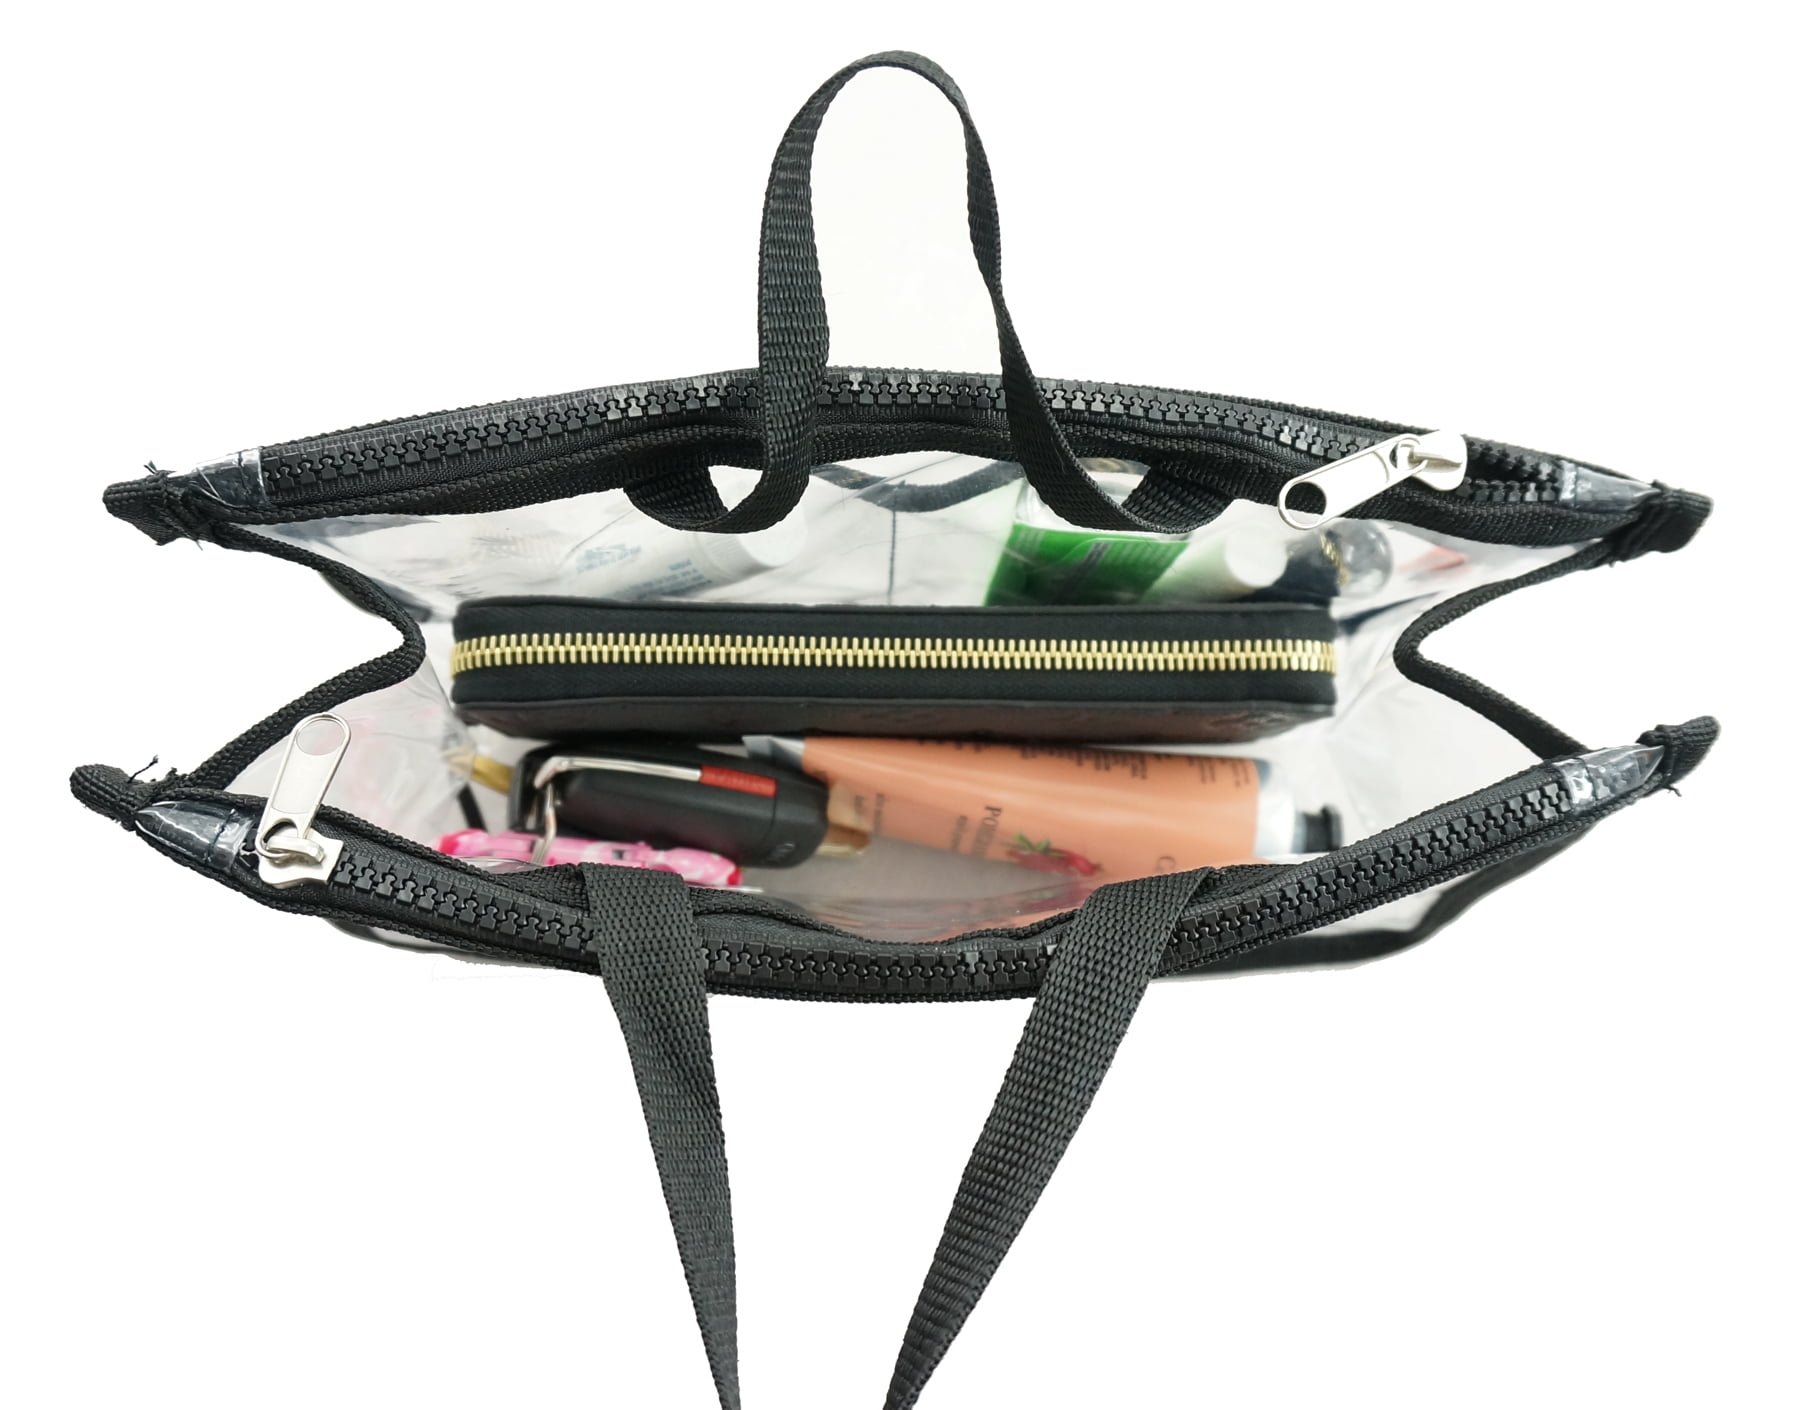 5 Pack Clear Handbag Organizer See Through Cosmetic Badget Insert Purse Travel | eBay